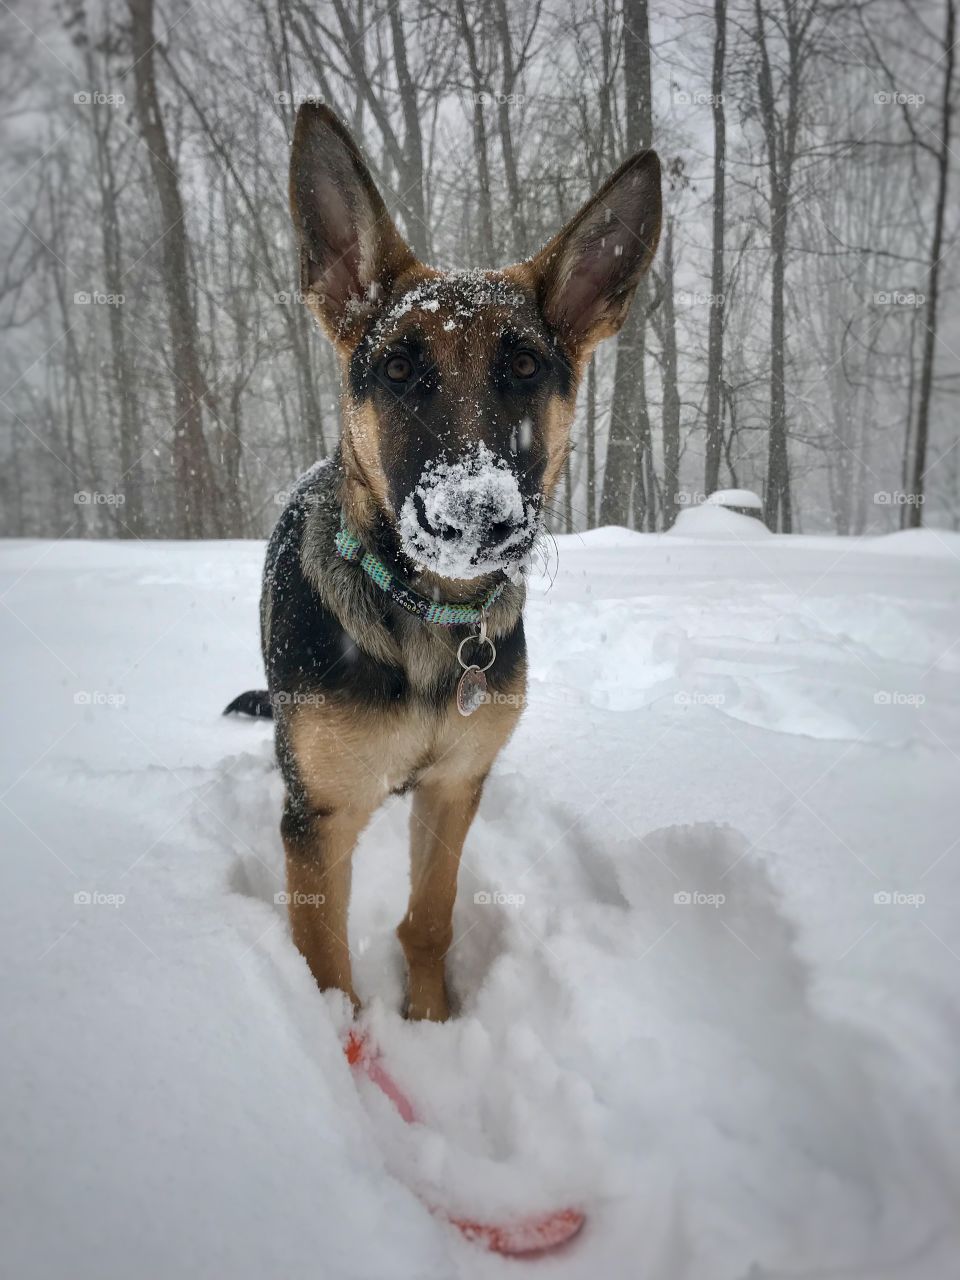 Puppy loving first snow